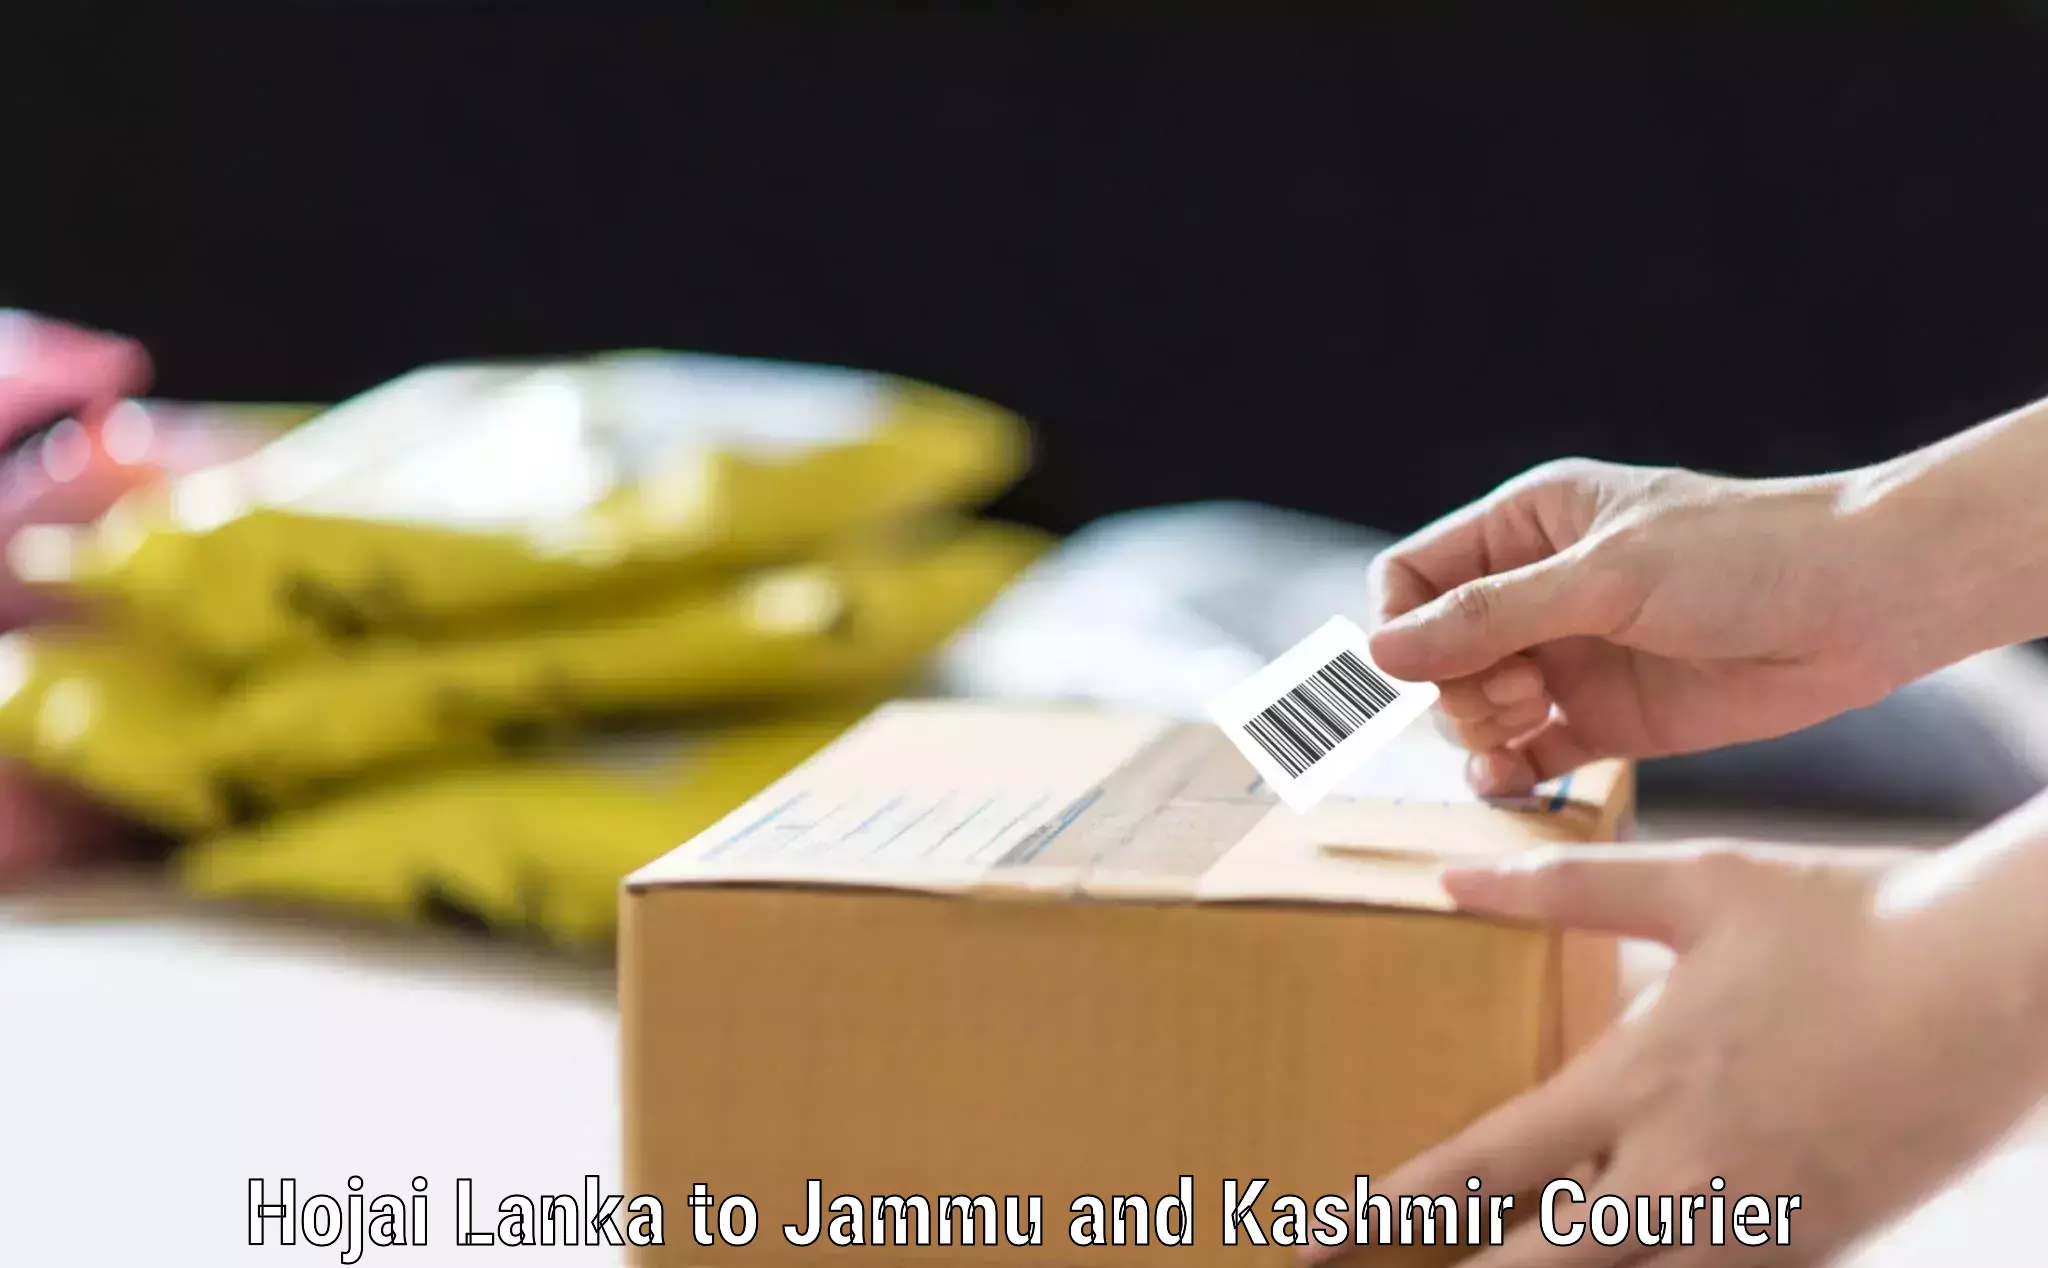 Quick luggage shipment Hojai Lanka to University of Jammu